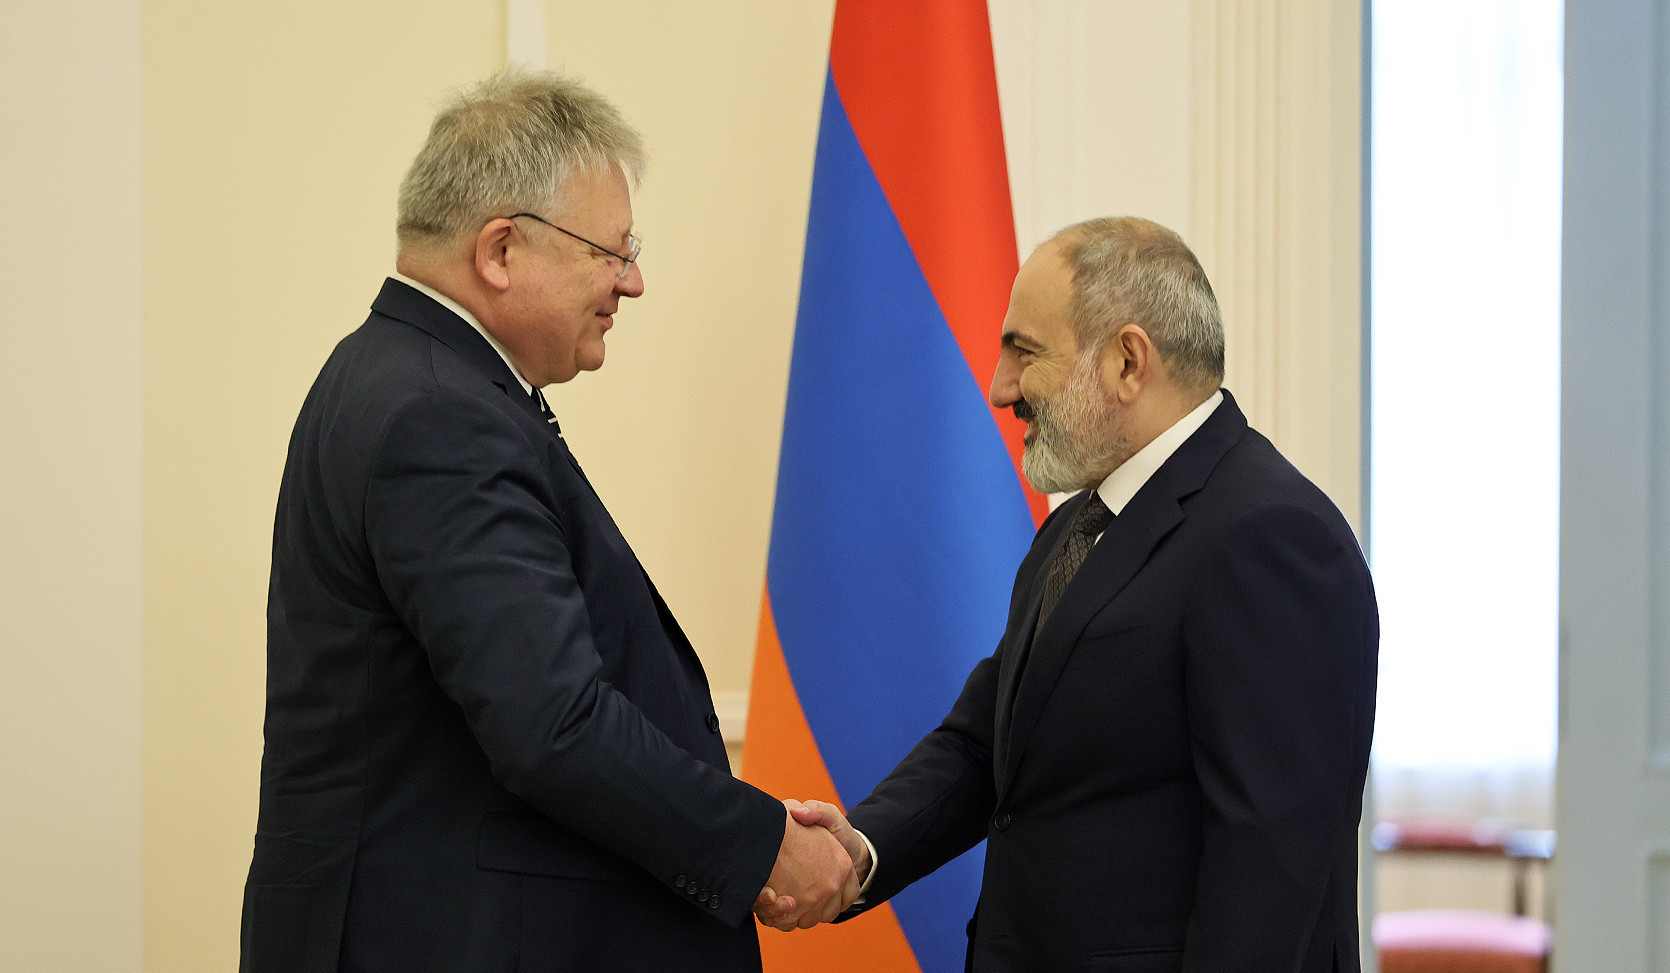 Prime Minister Nikol Pashinyan received Bruno Kahl